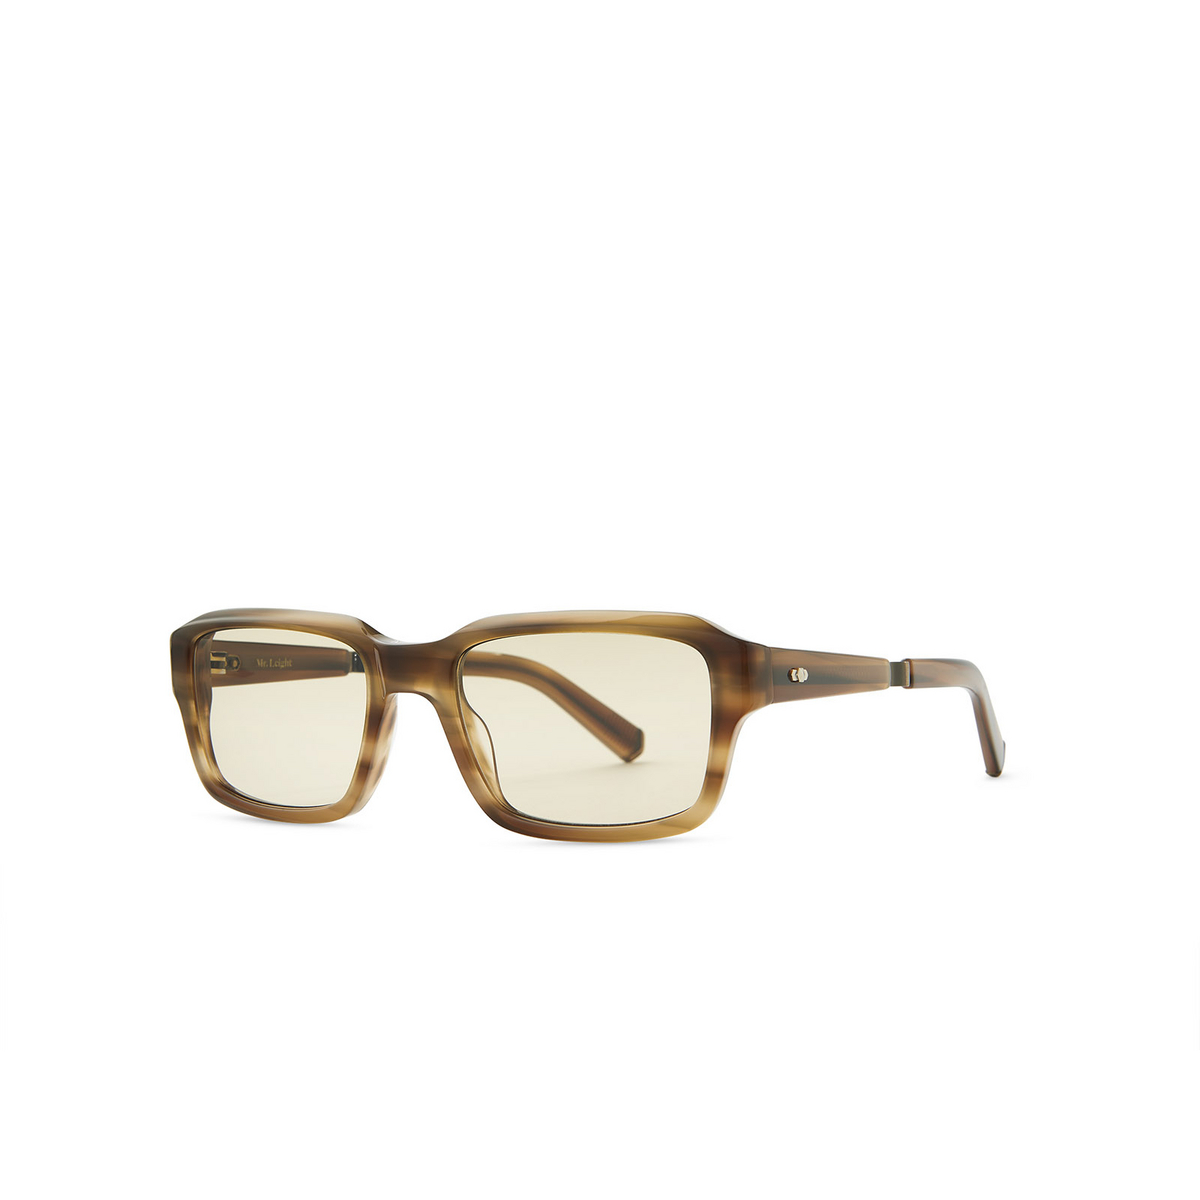 Mr. Leight KANE C Eyeglasses MACA-ATG-DEM BGE Macadamia-Antique Gold-Demo Beige - three-quarters view